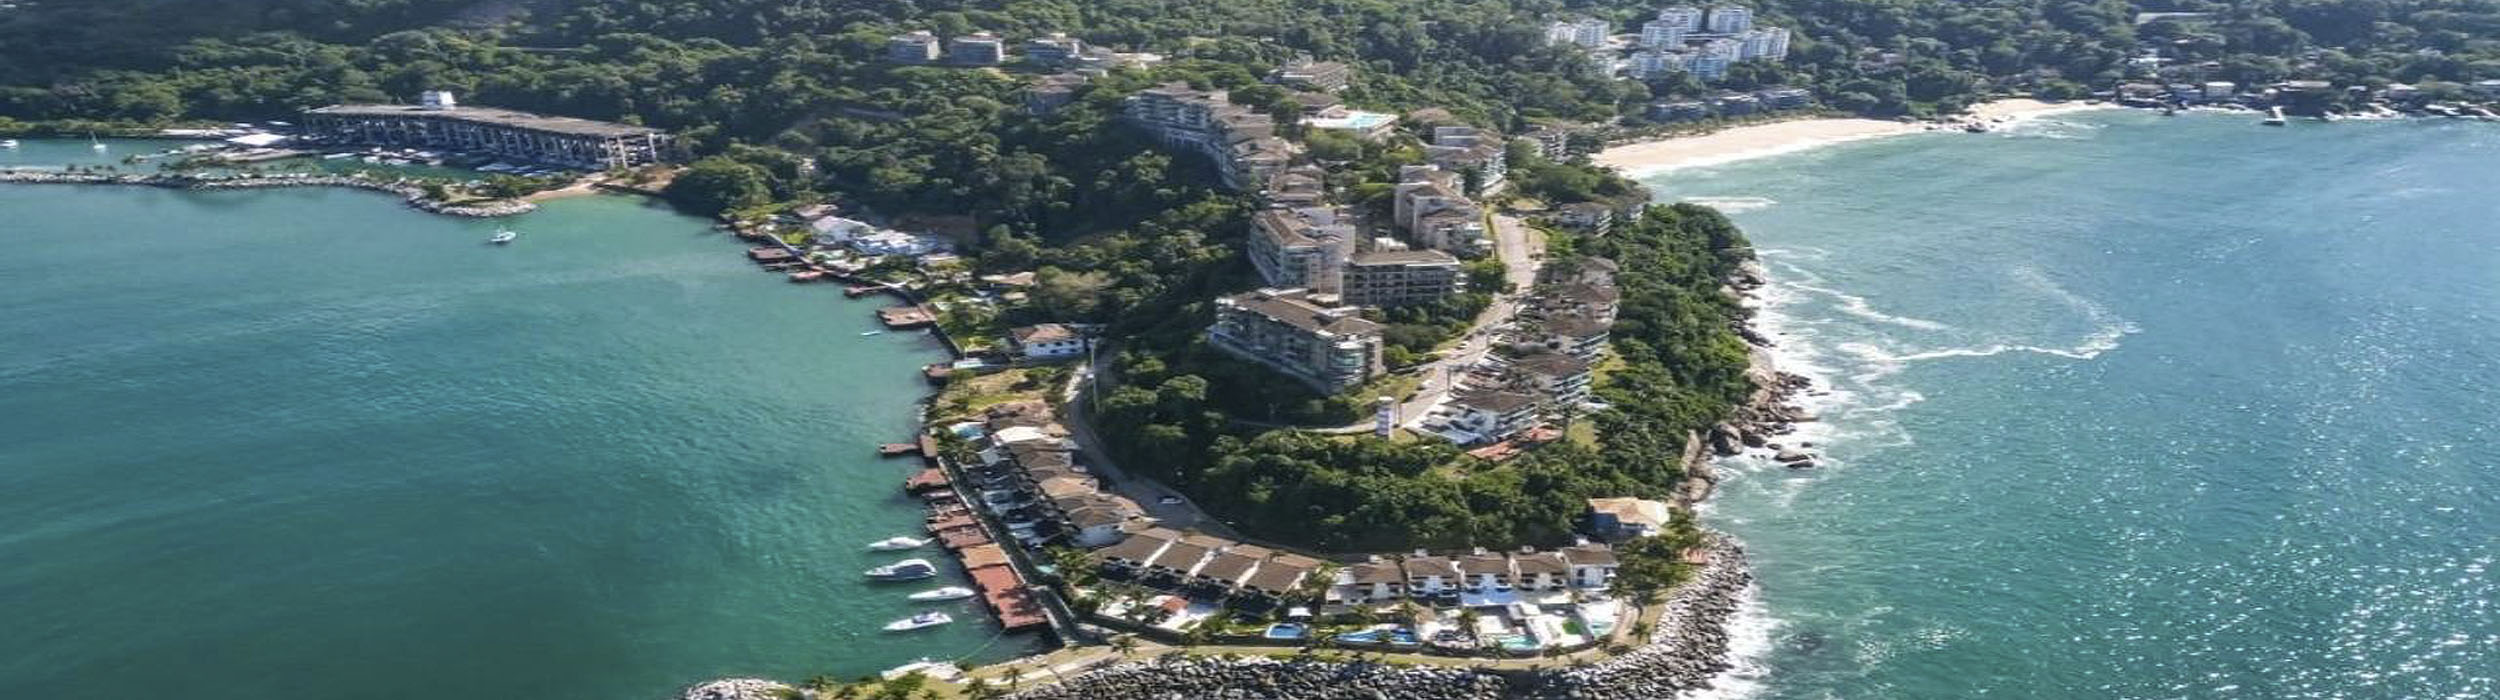 O Condomínio - Condomínio Porto Real Resort